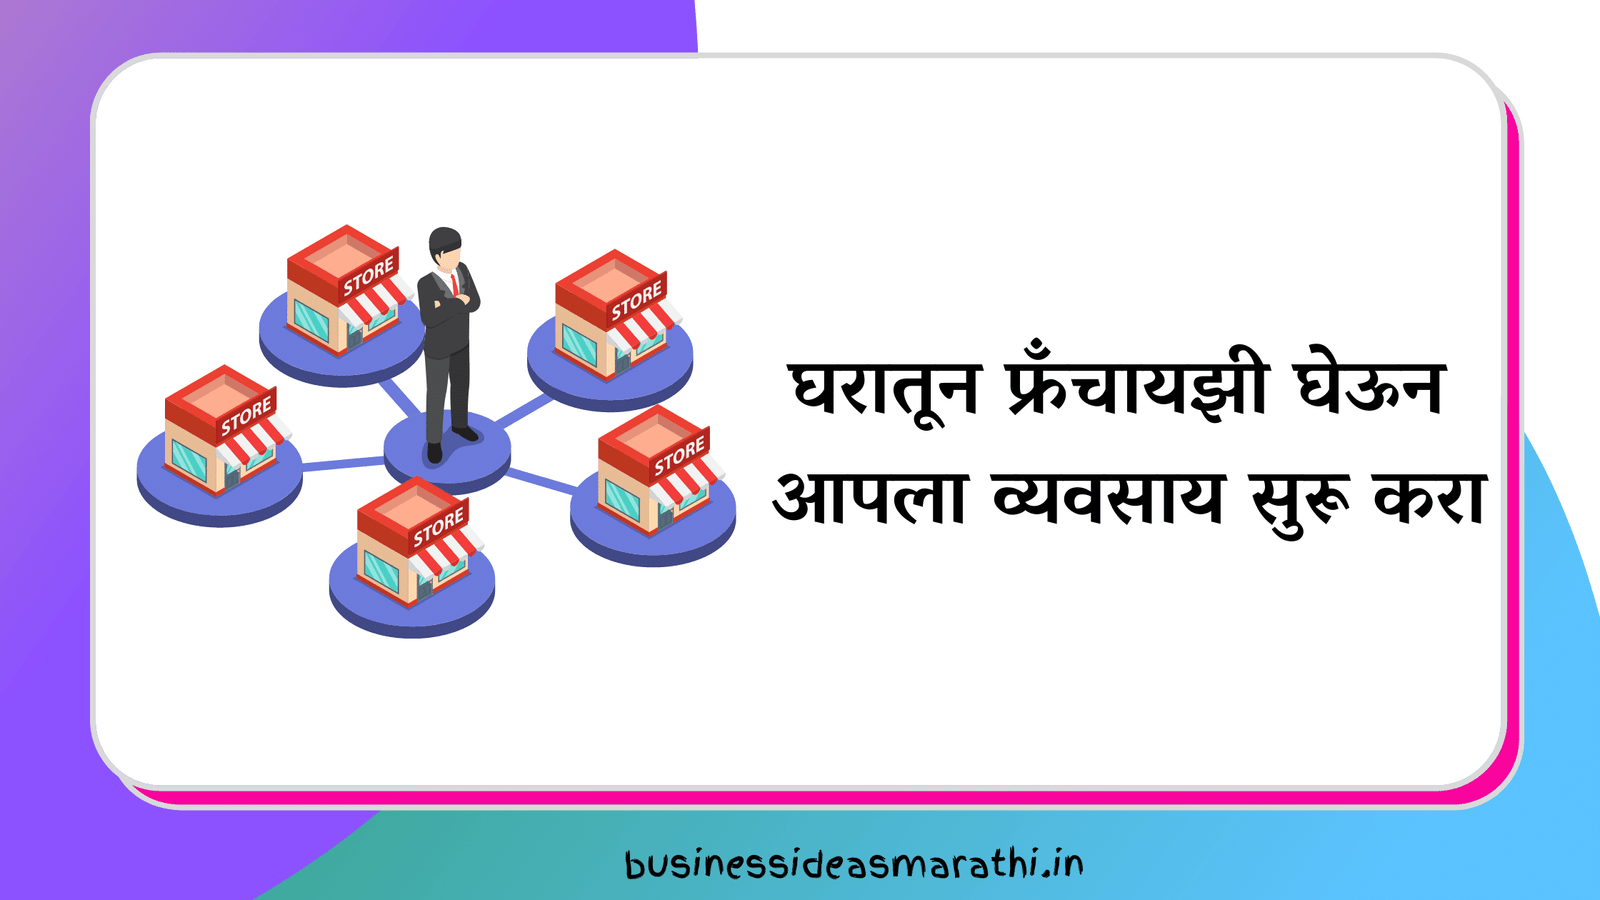 franchise business information in marathi